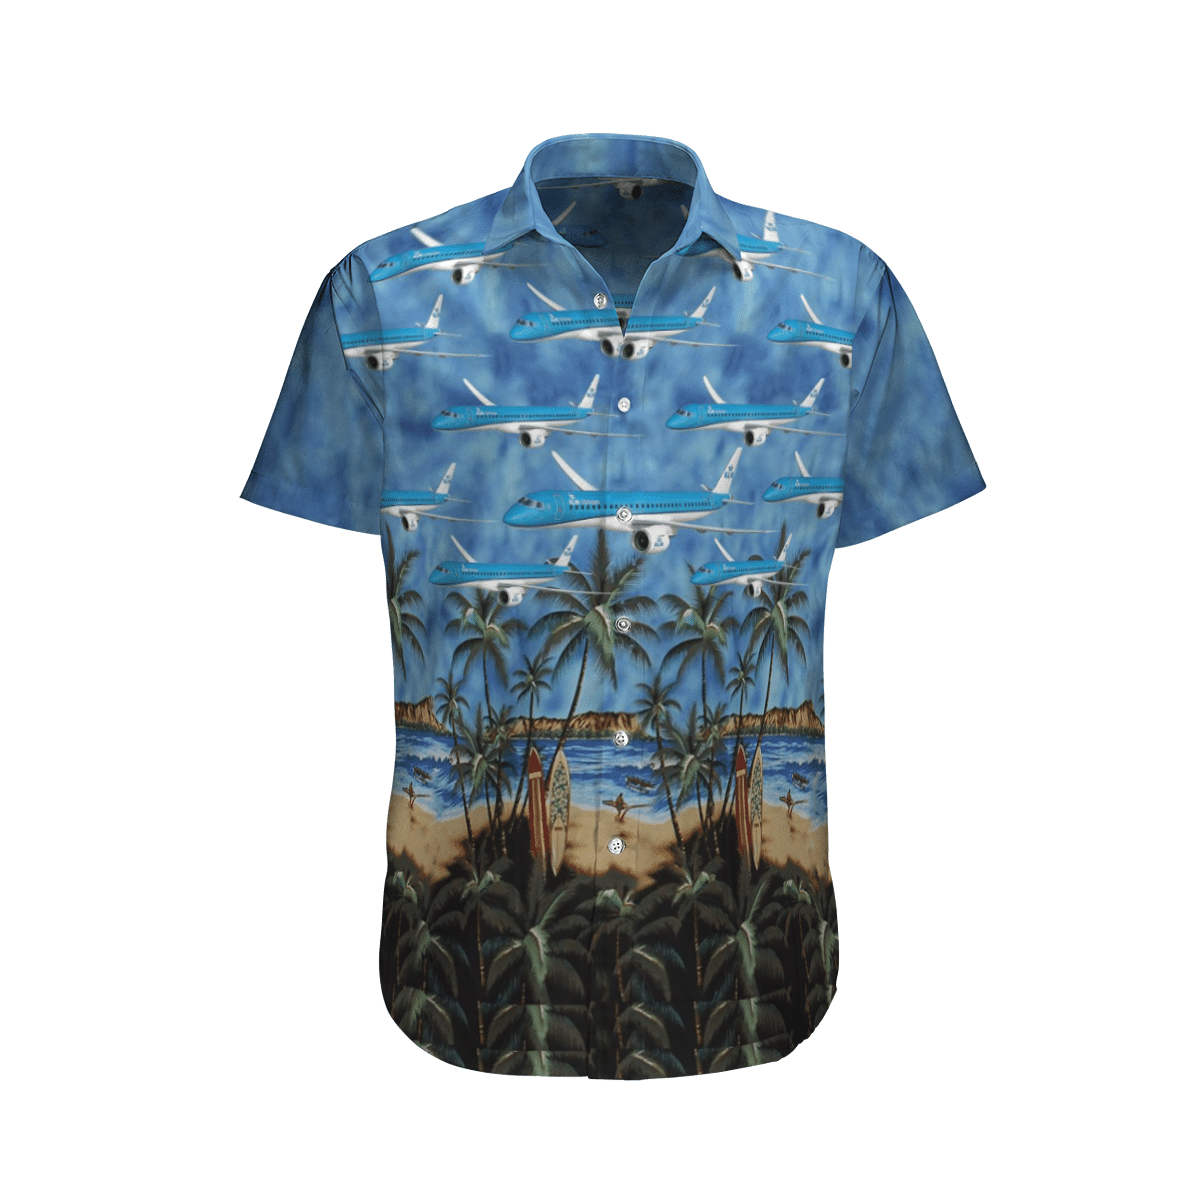 Get a new Hawaiian shirt to enjoy summer vacation 144